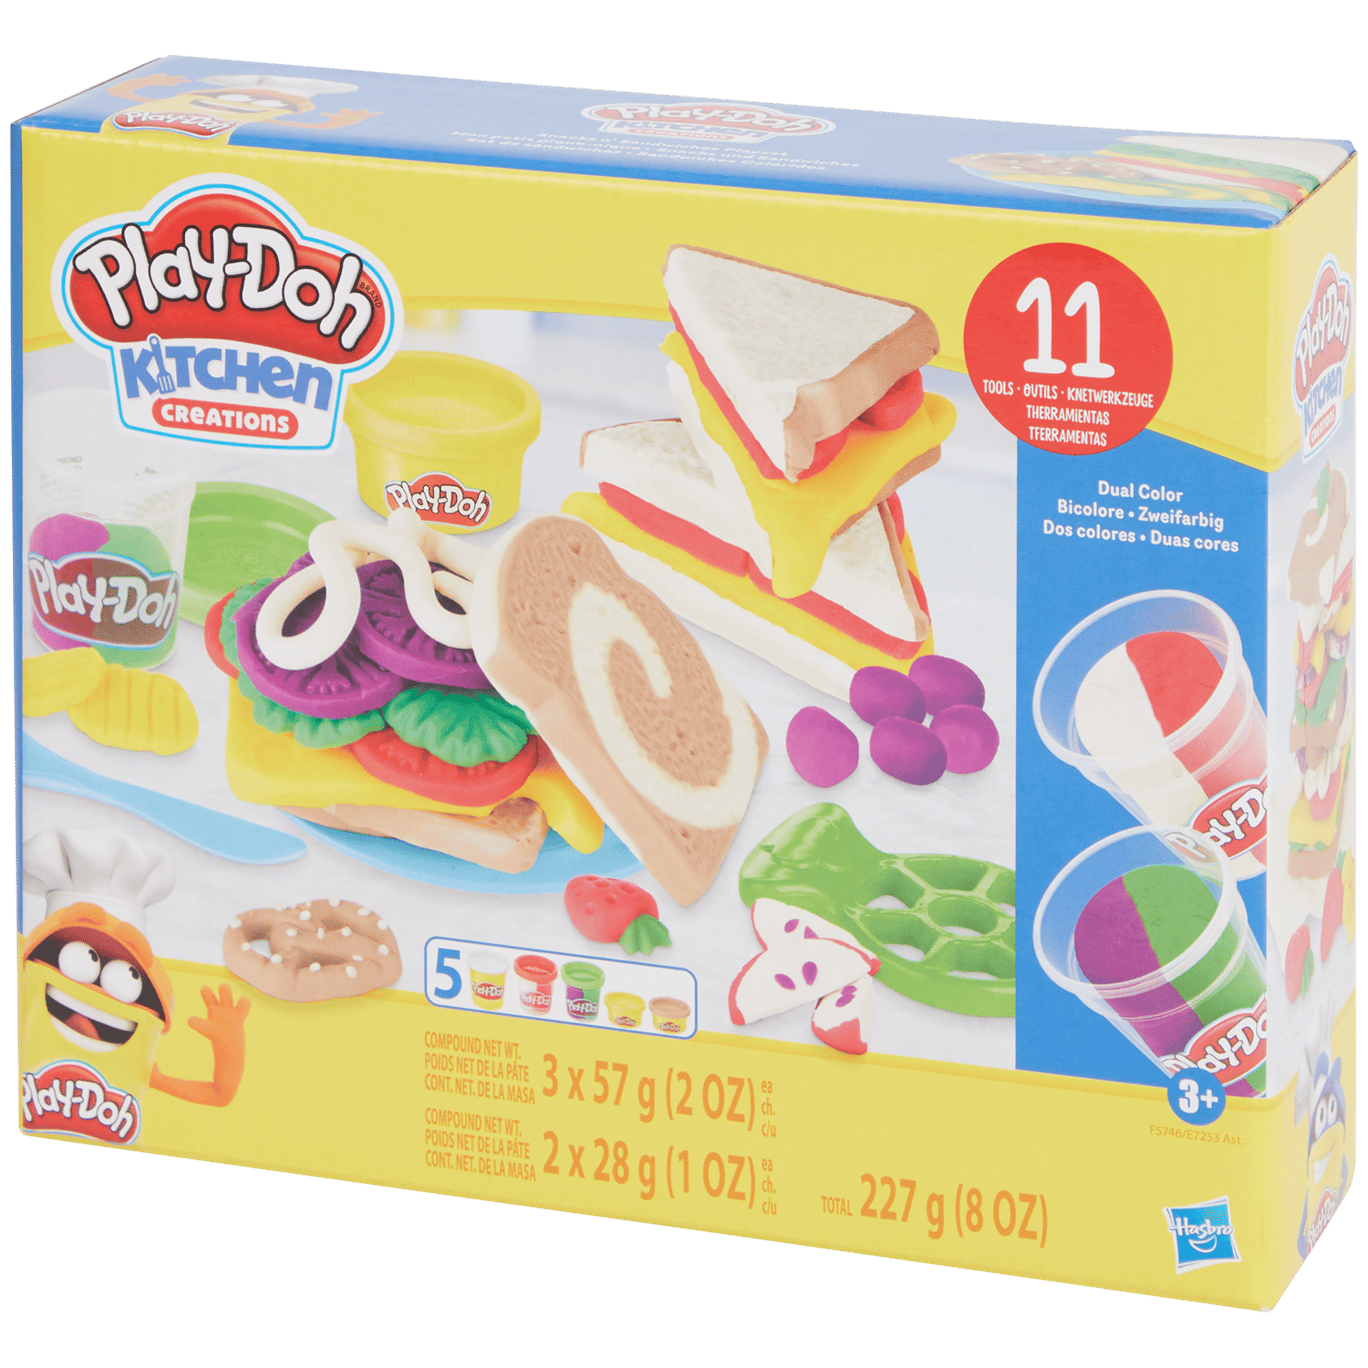 Play-Doh Kitchen Creations Knetset